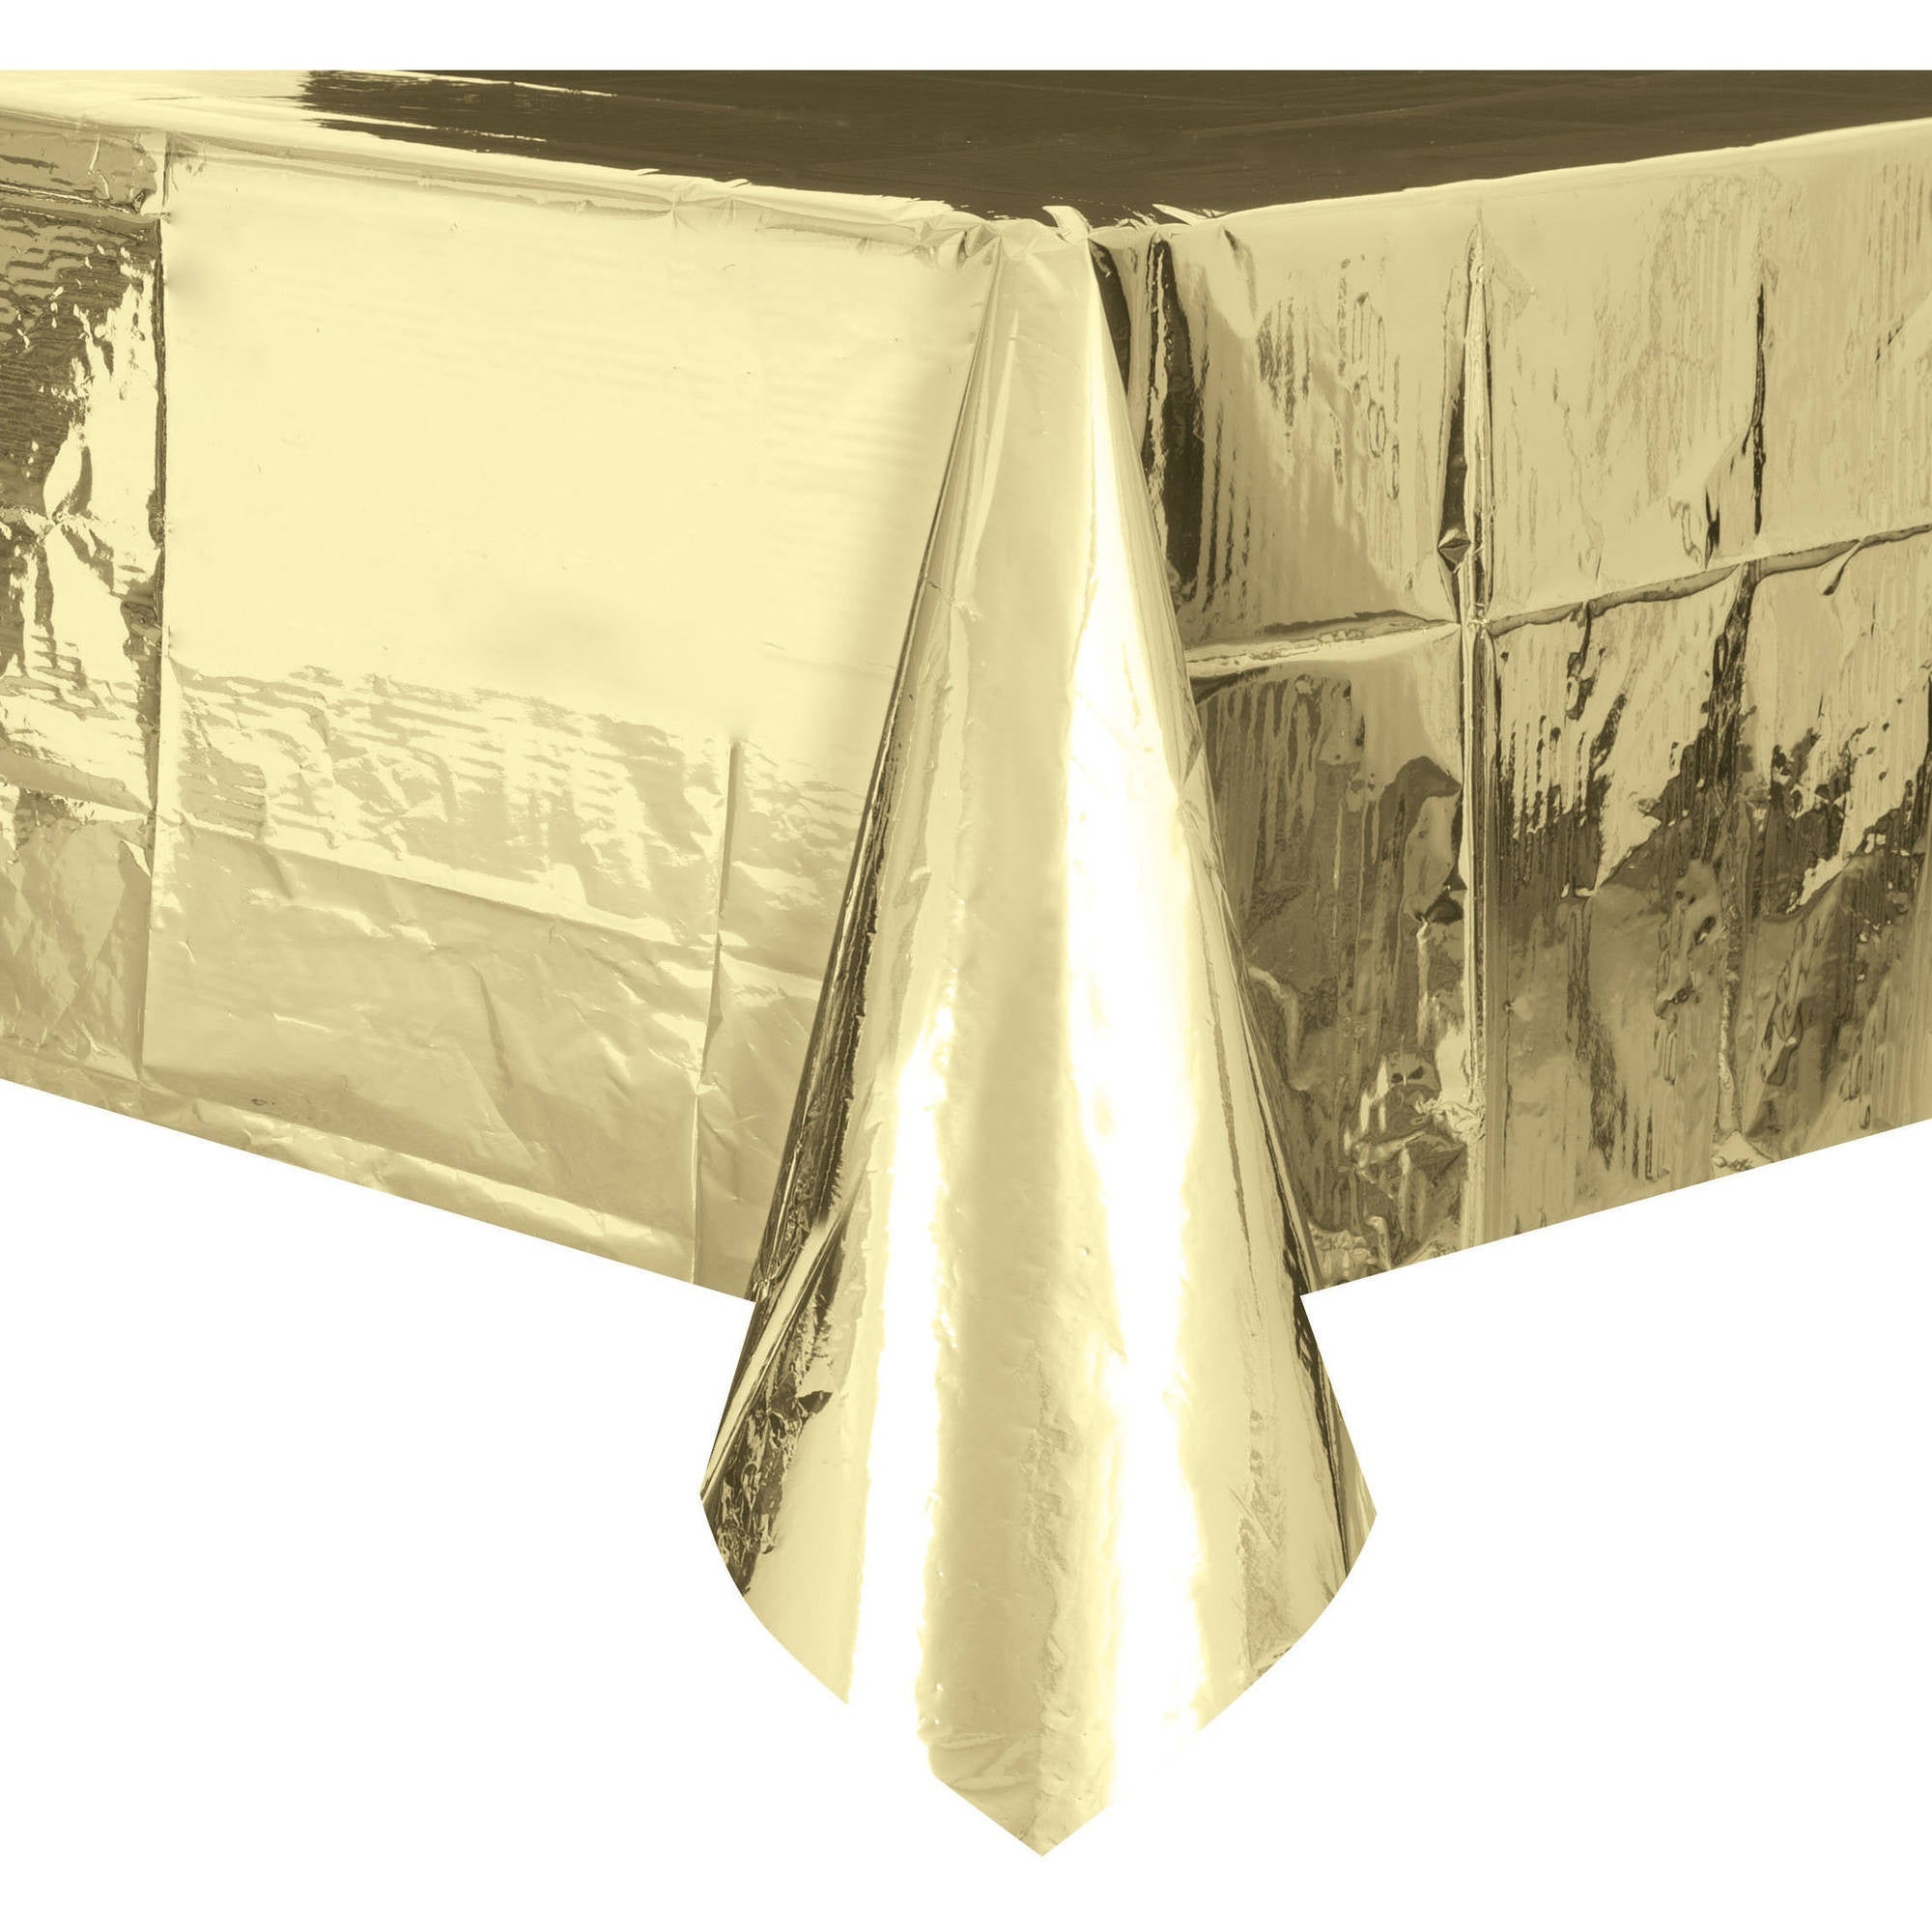 54" Metallic Rectangular Table Covers - 54" x 108" | 1 Count